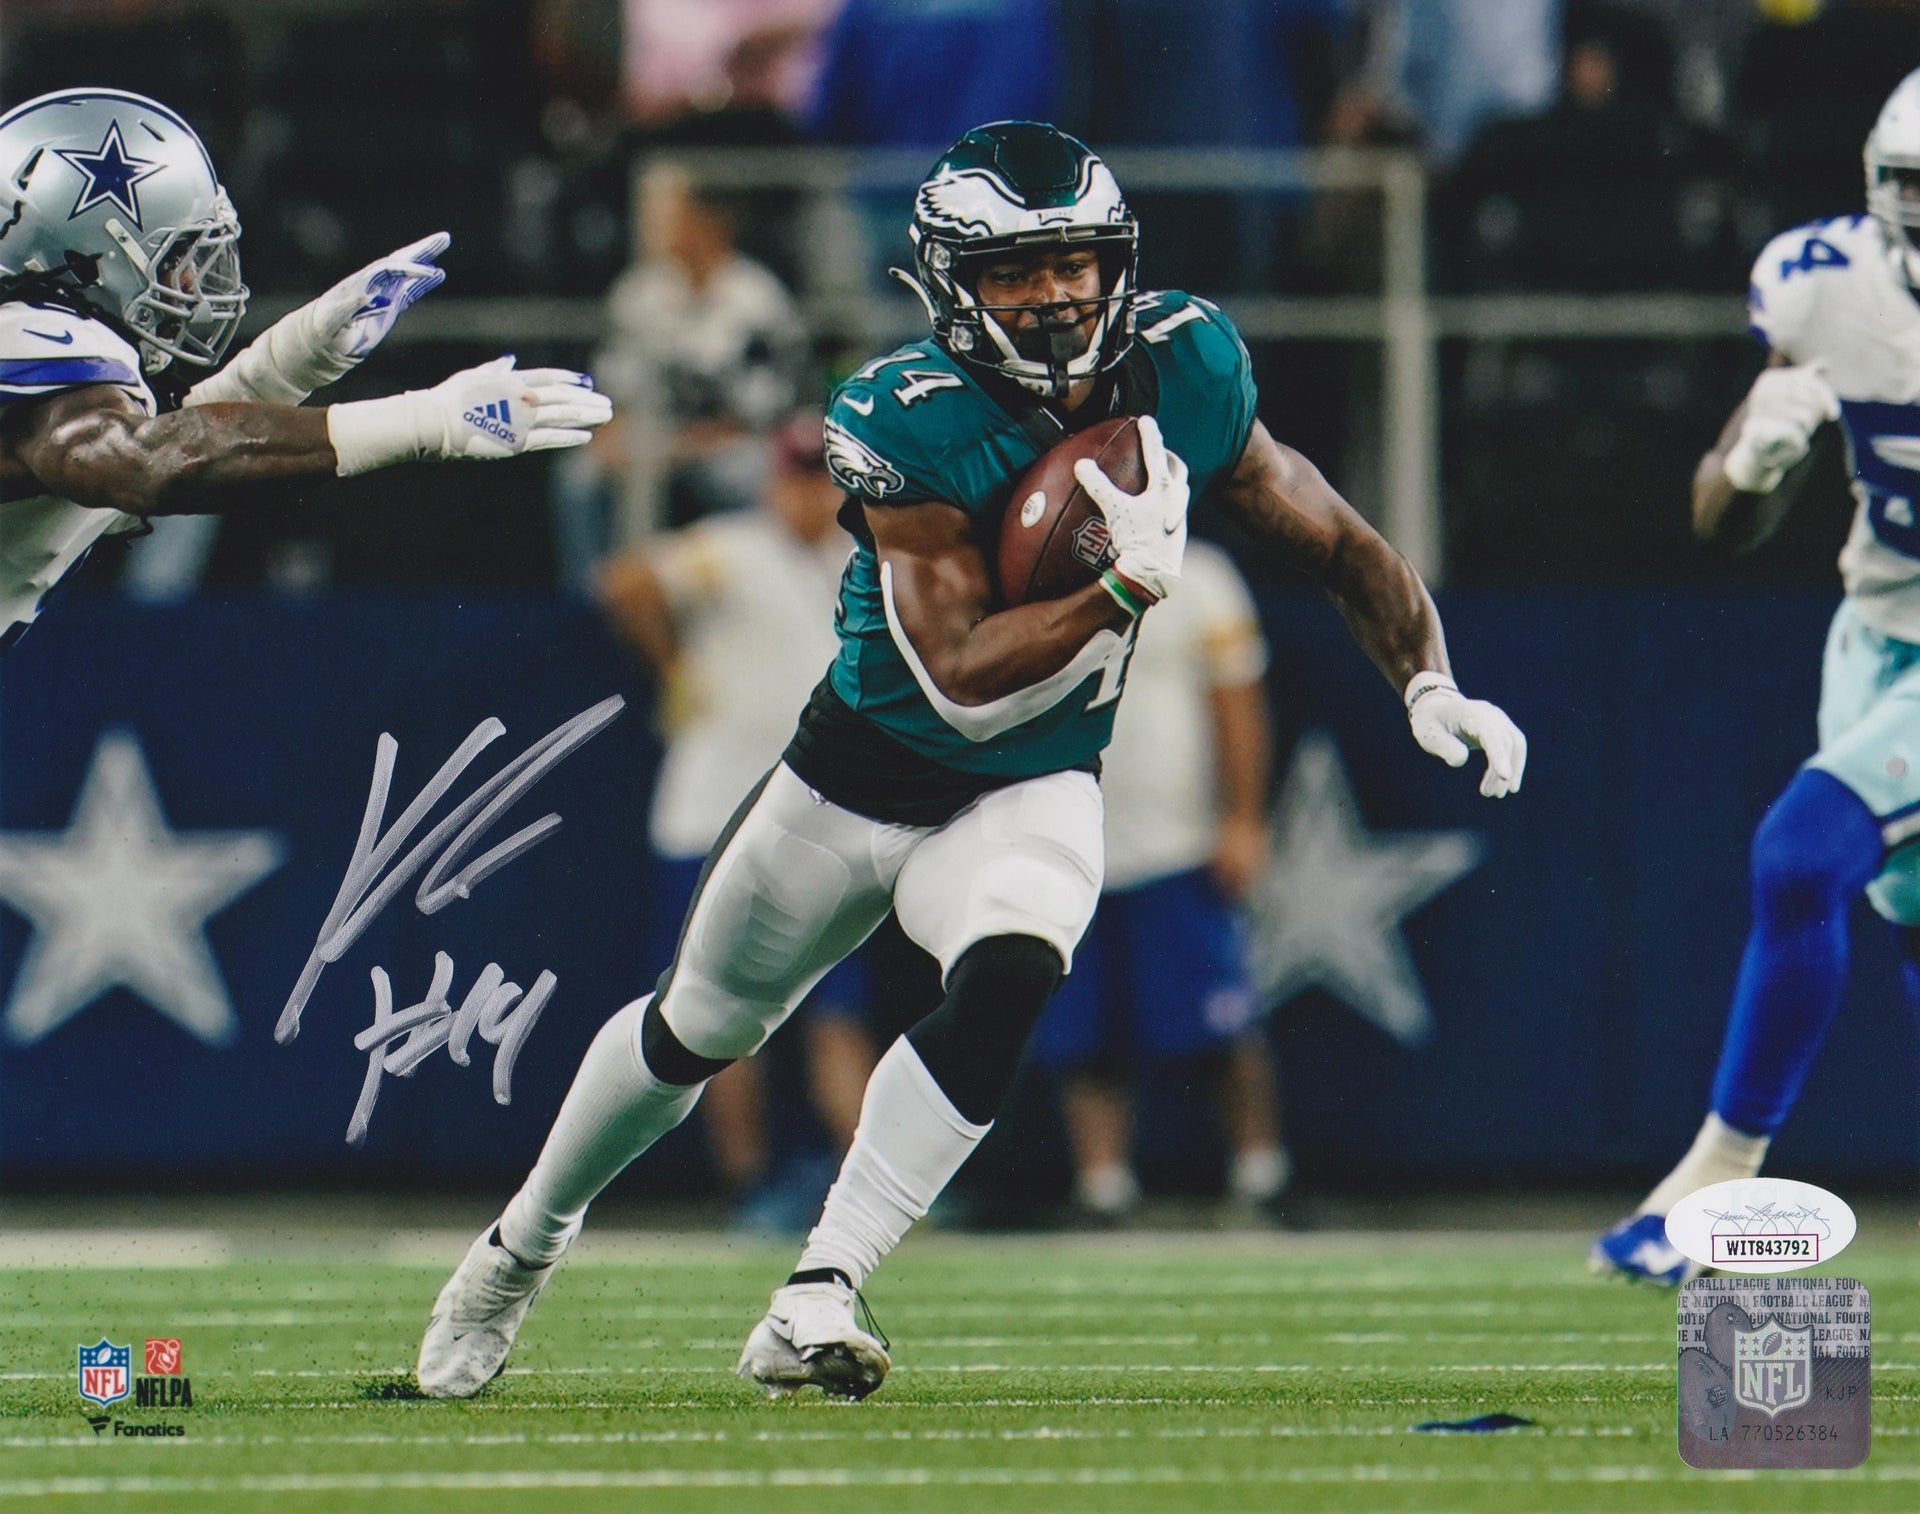 Kenneth Gainwell v. Cowboys Philadelphia Eagles Autographed Football Photo - Dynasty Sports & Framing 